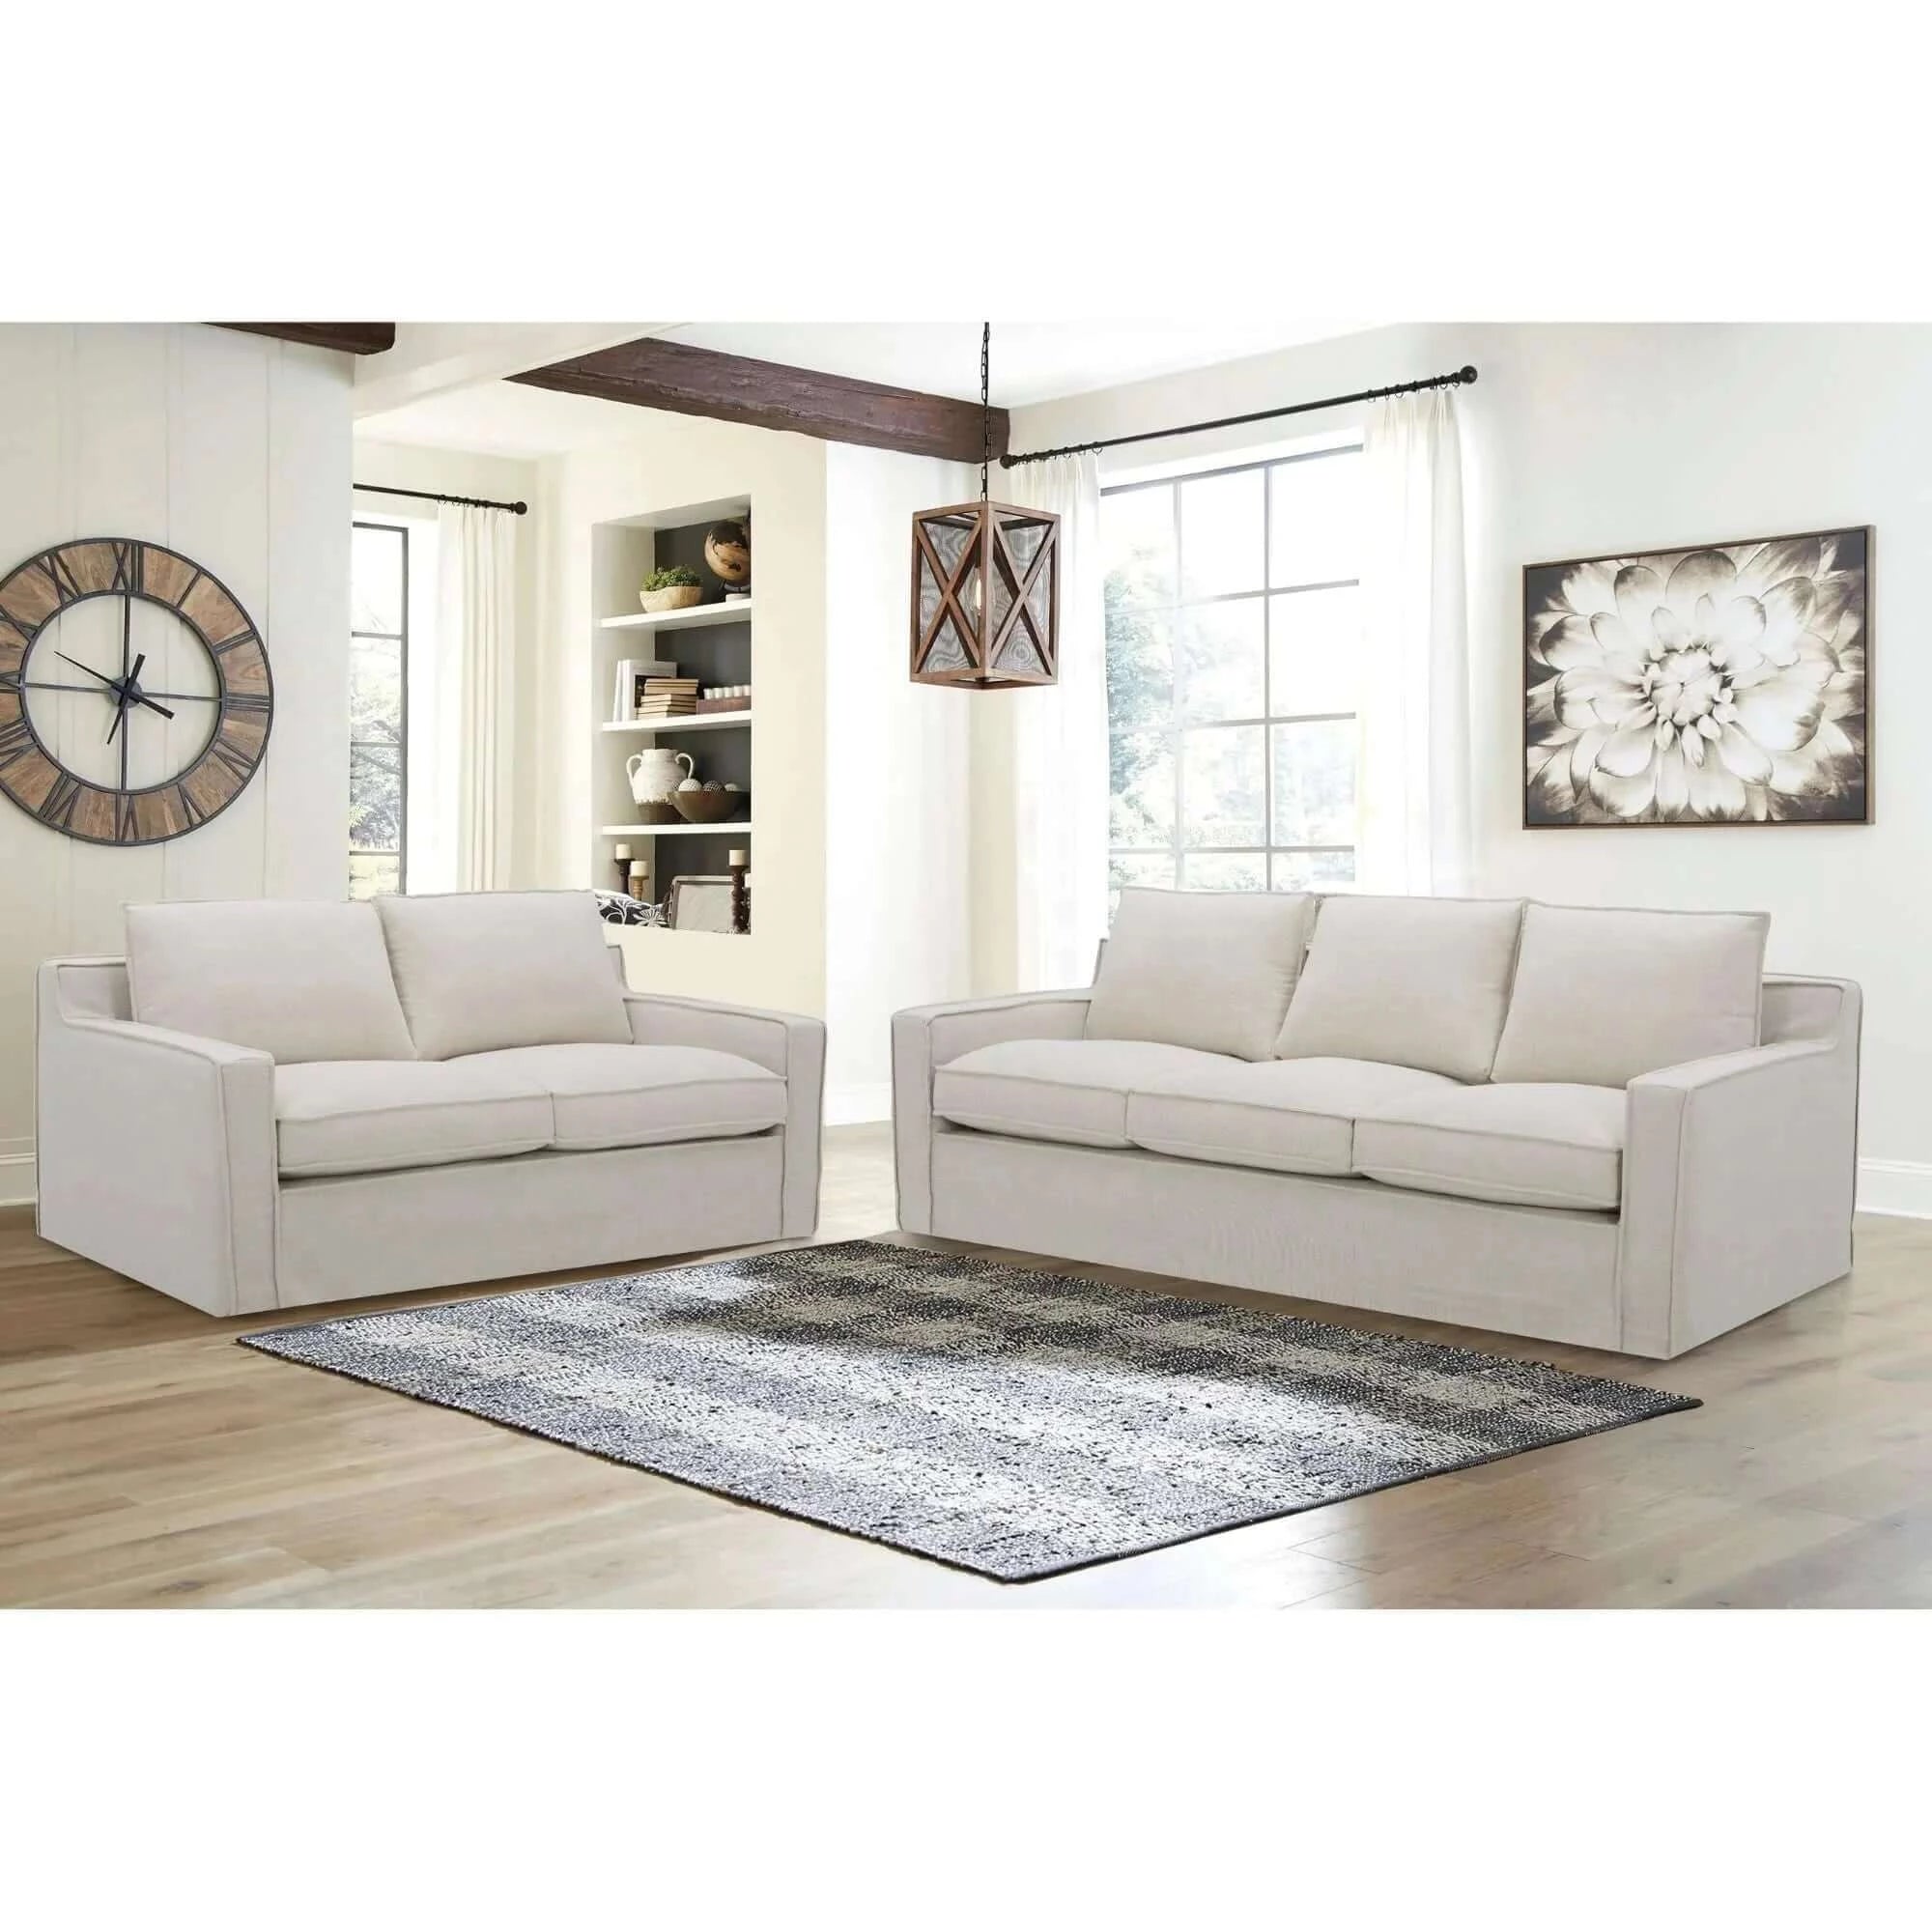 Buy Plushy 2 Seater Sofa Fabric Uplholstered Lounge Couch – Upinteriors-Upinteriors